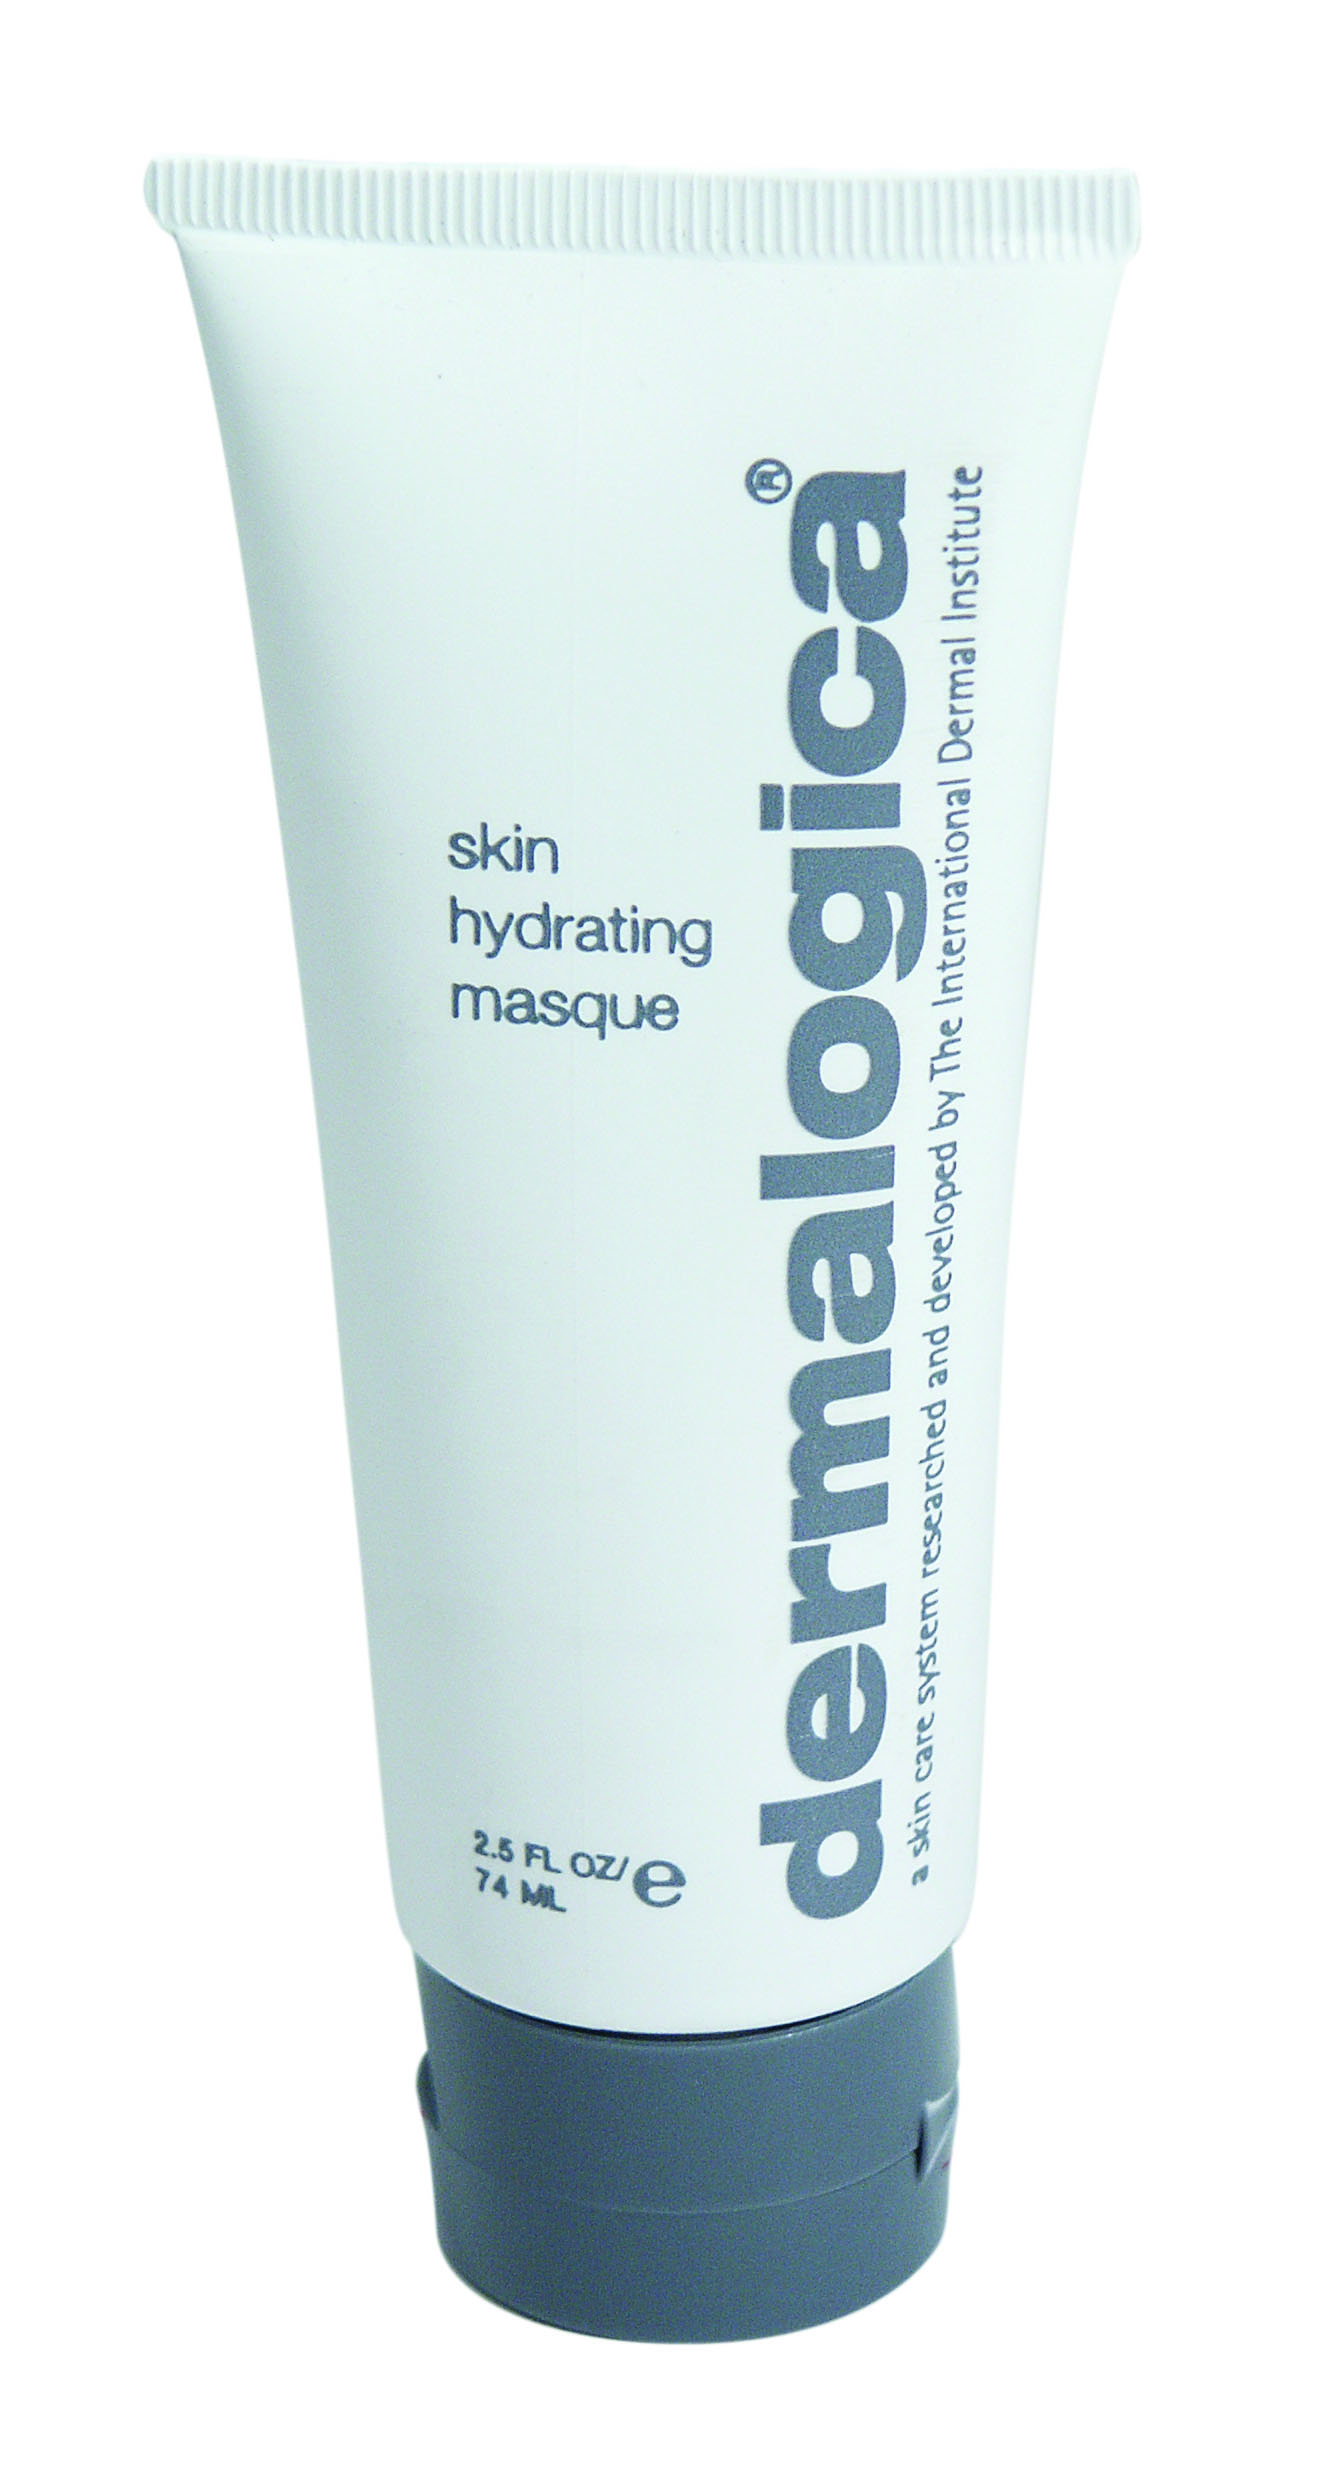 Dermalogica skin hydrating masque